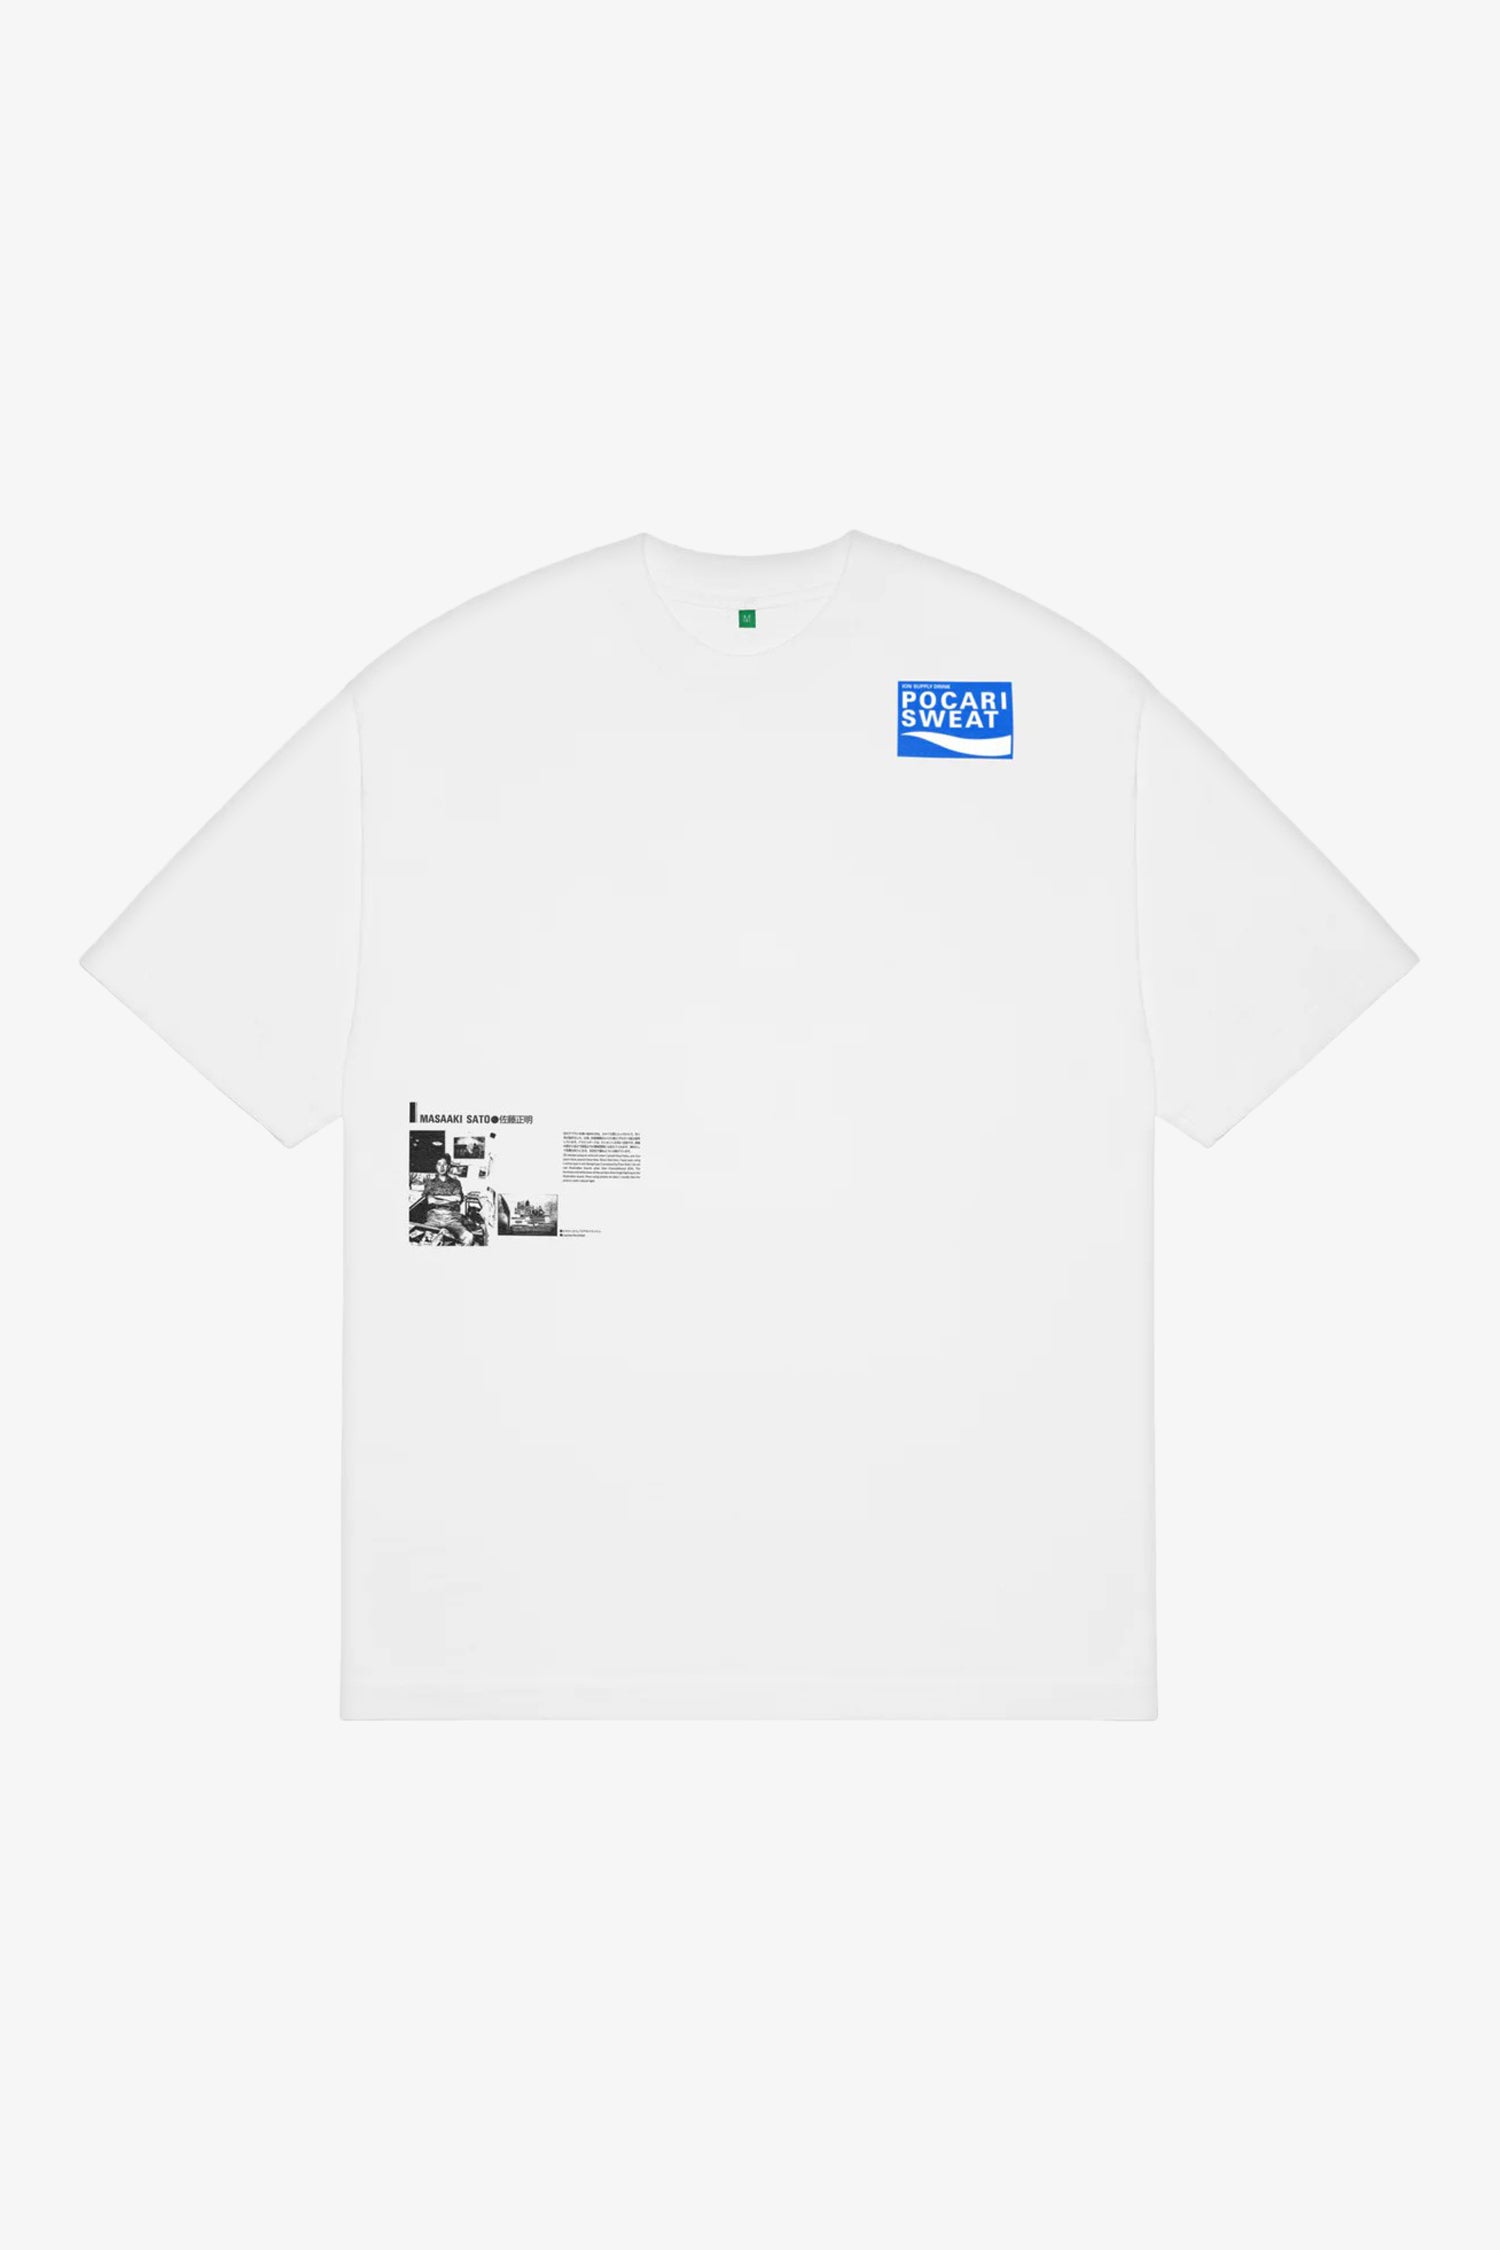 Pocari Sweat T-Shirt- Selectshop FRAME